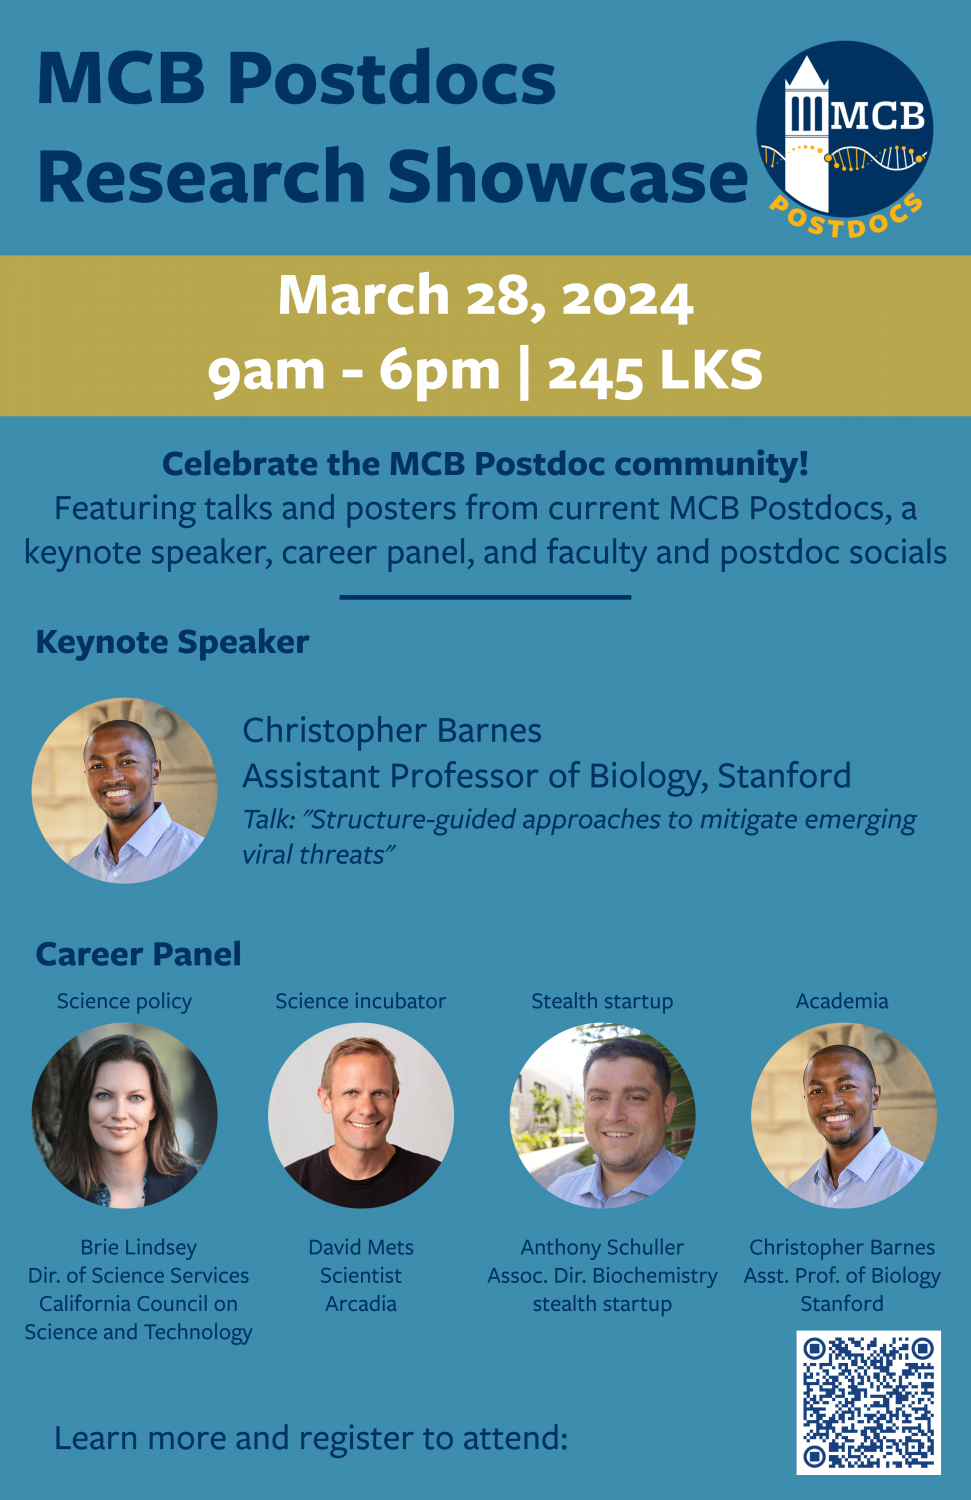 MCB Postdocs Research Showcase event flyer